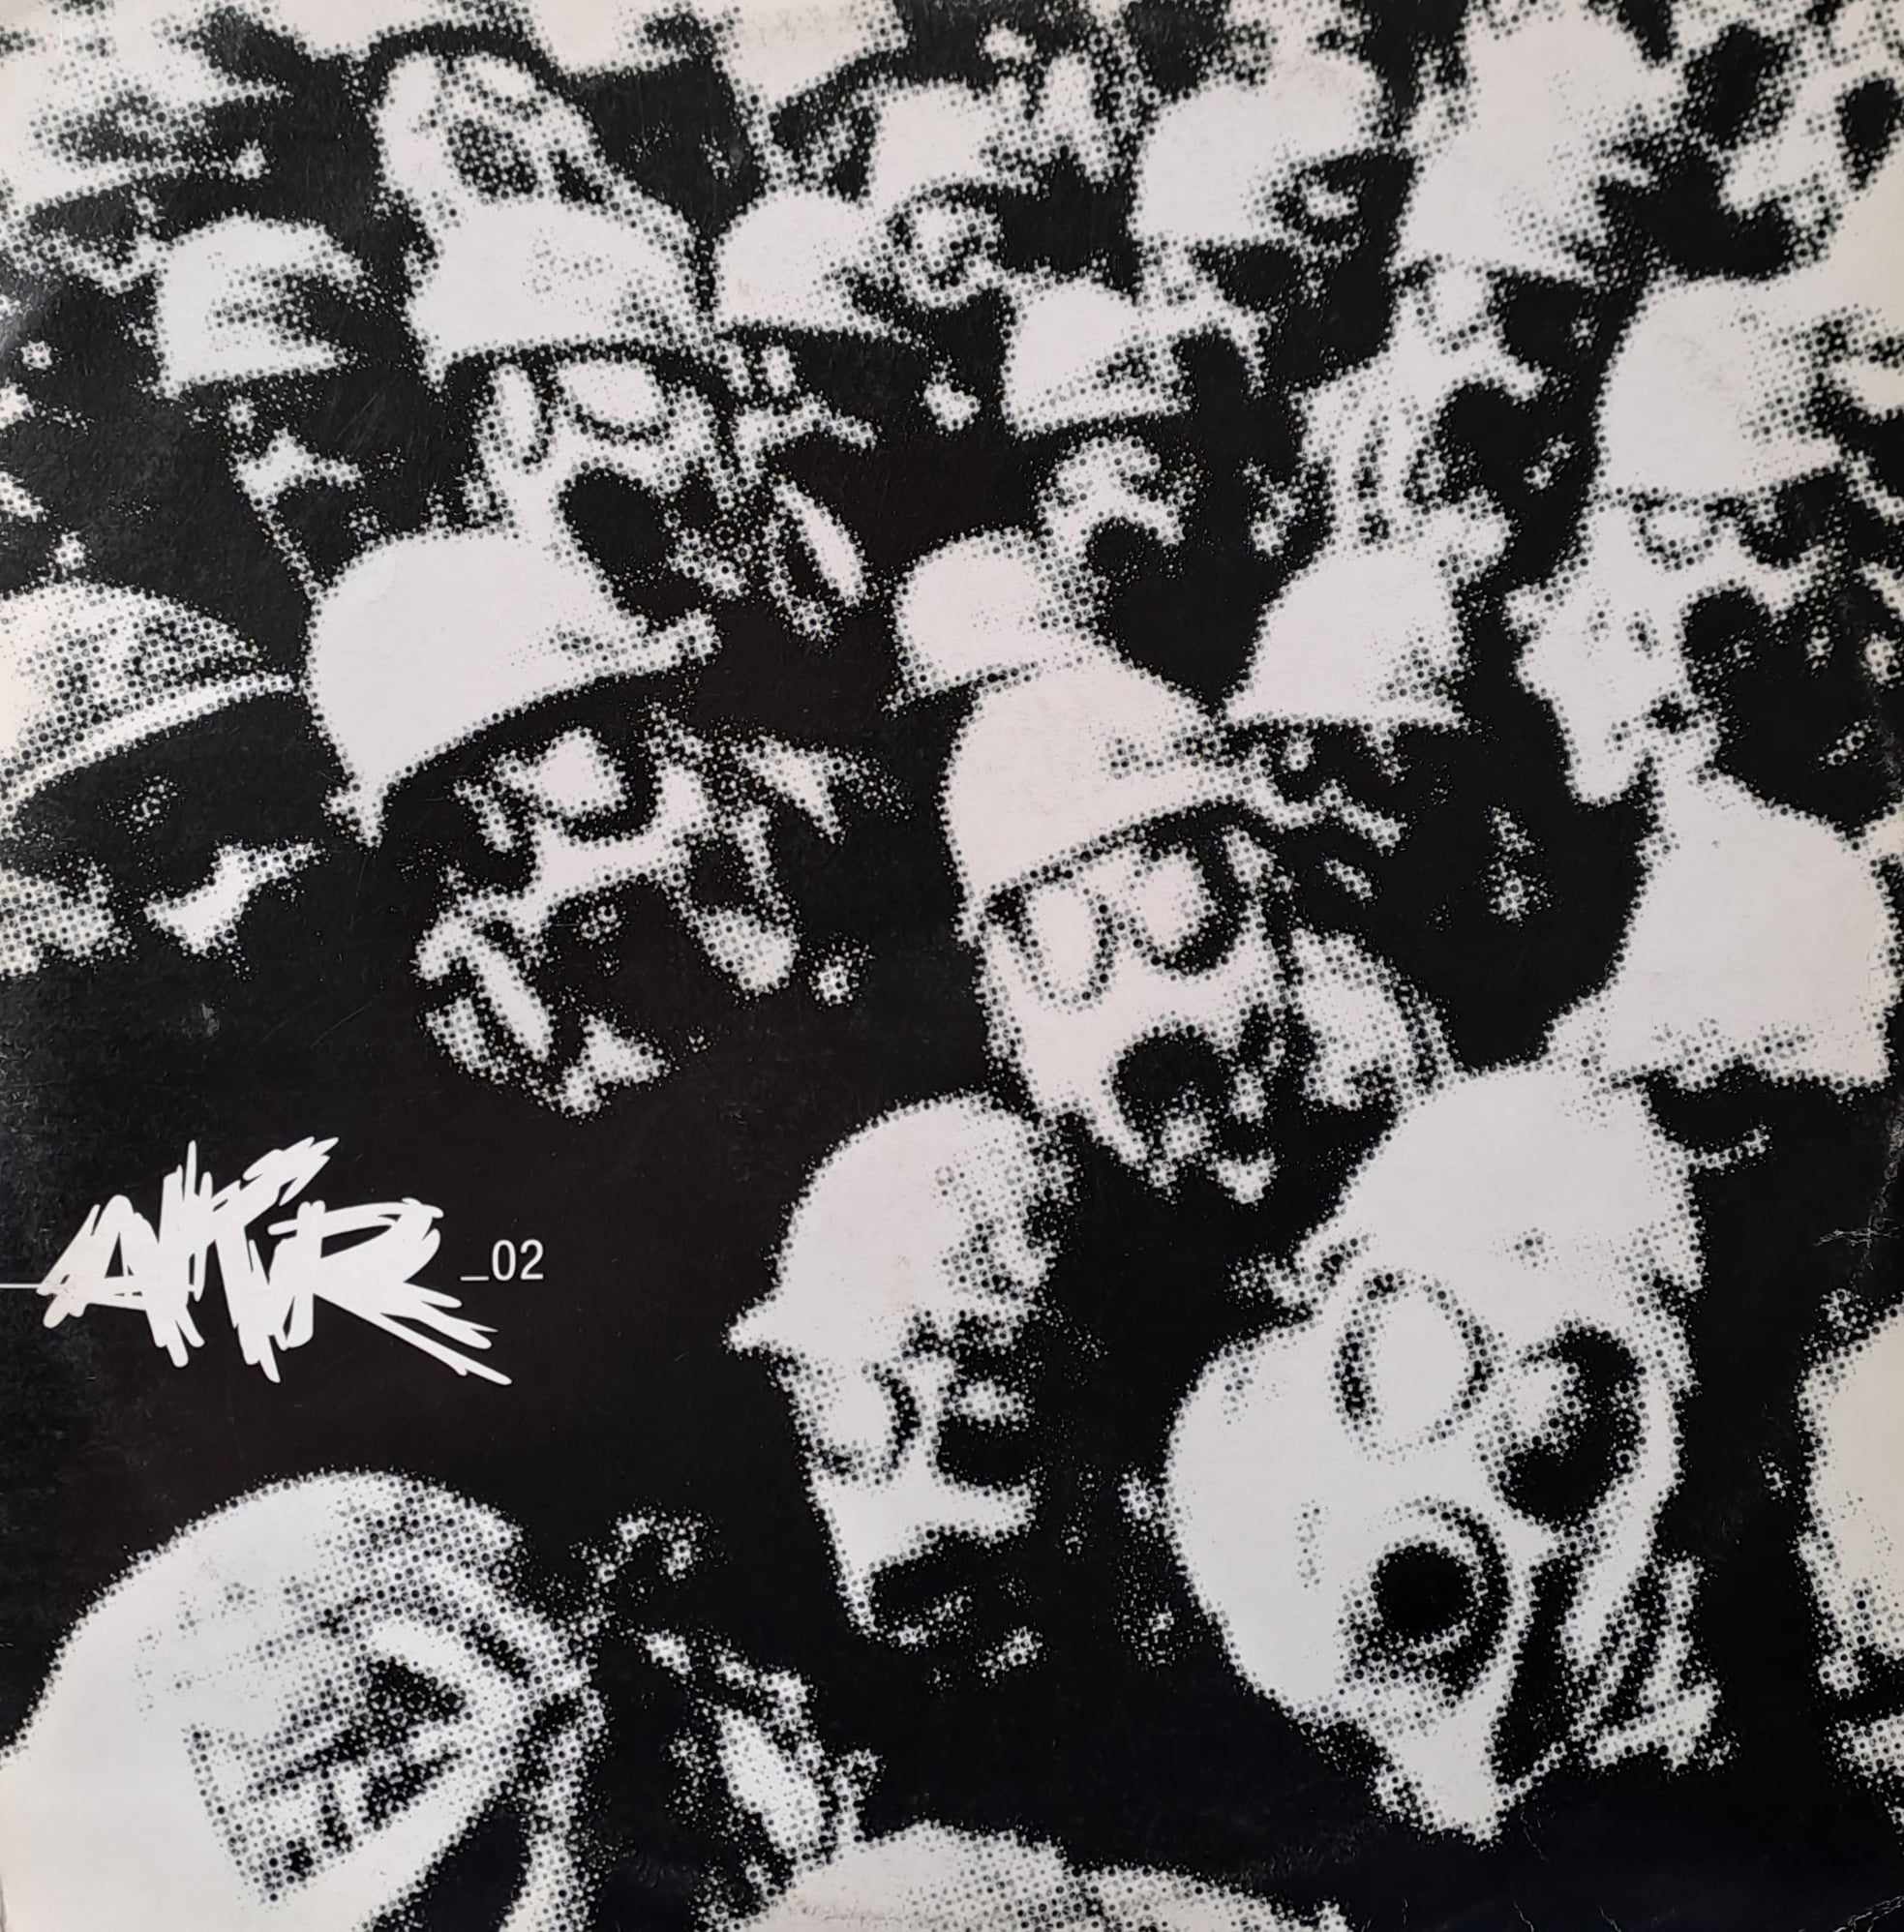 AKR 02 - vinyle hardcore